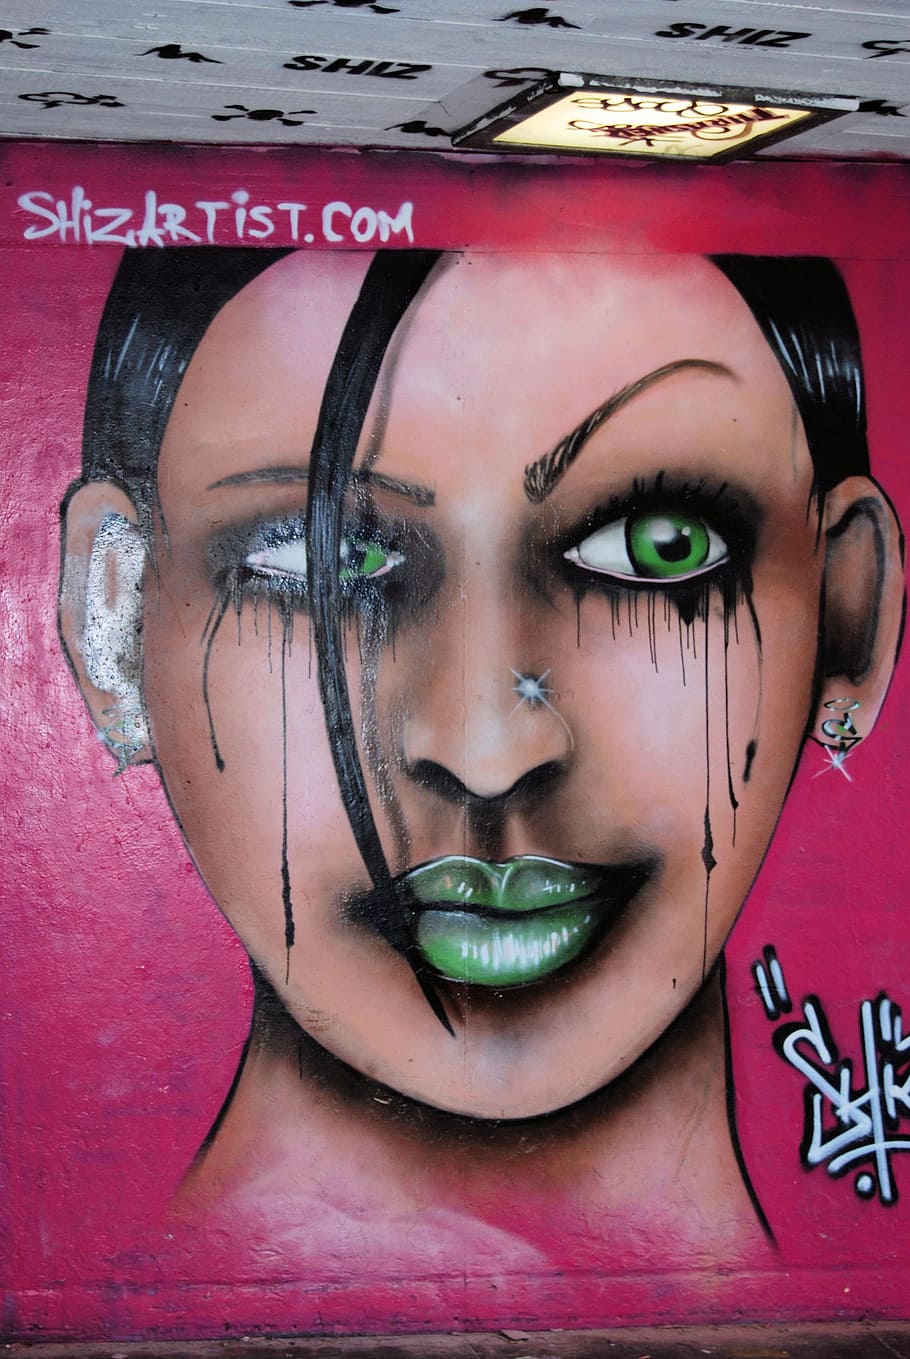 Hd Wallpaper Graffiti Mural South Bank Undercroft London Images, Photos, Reviews